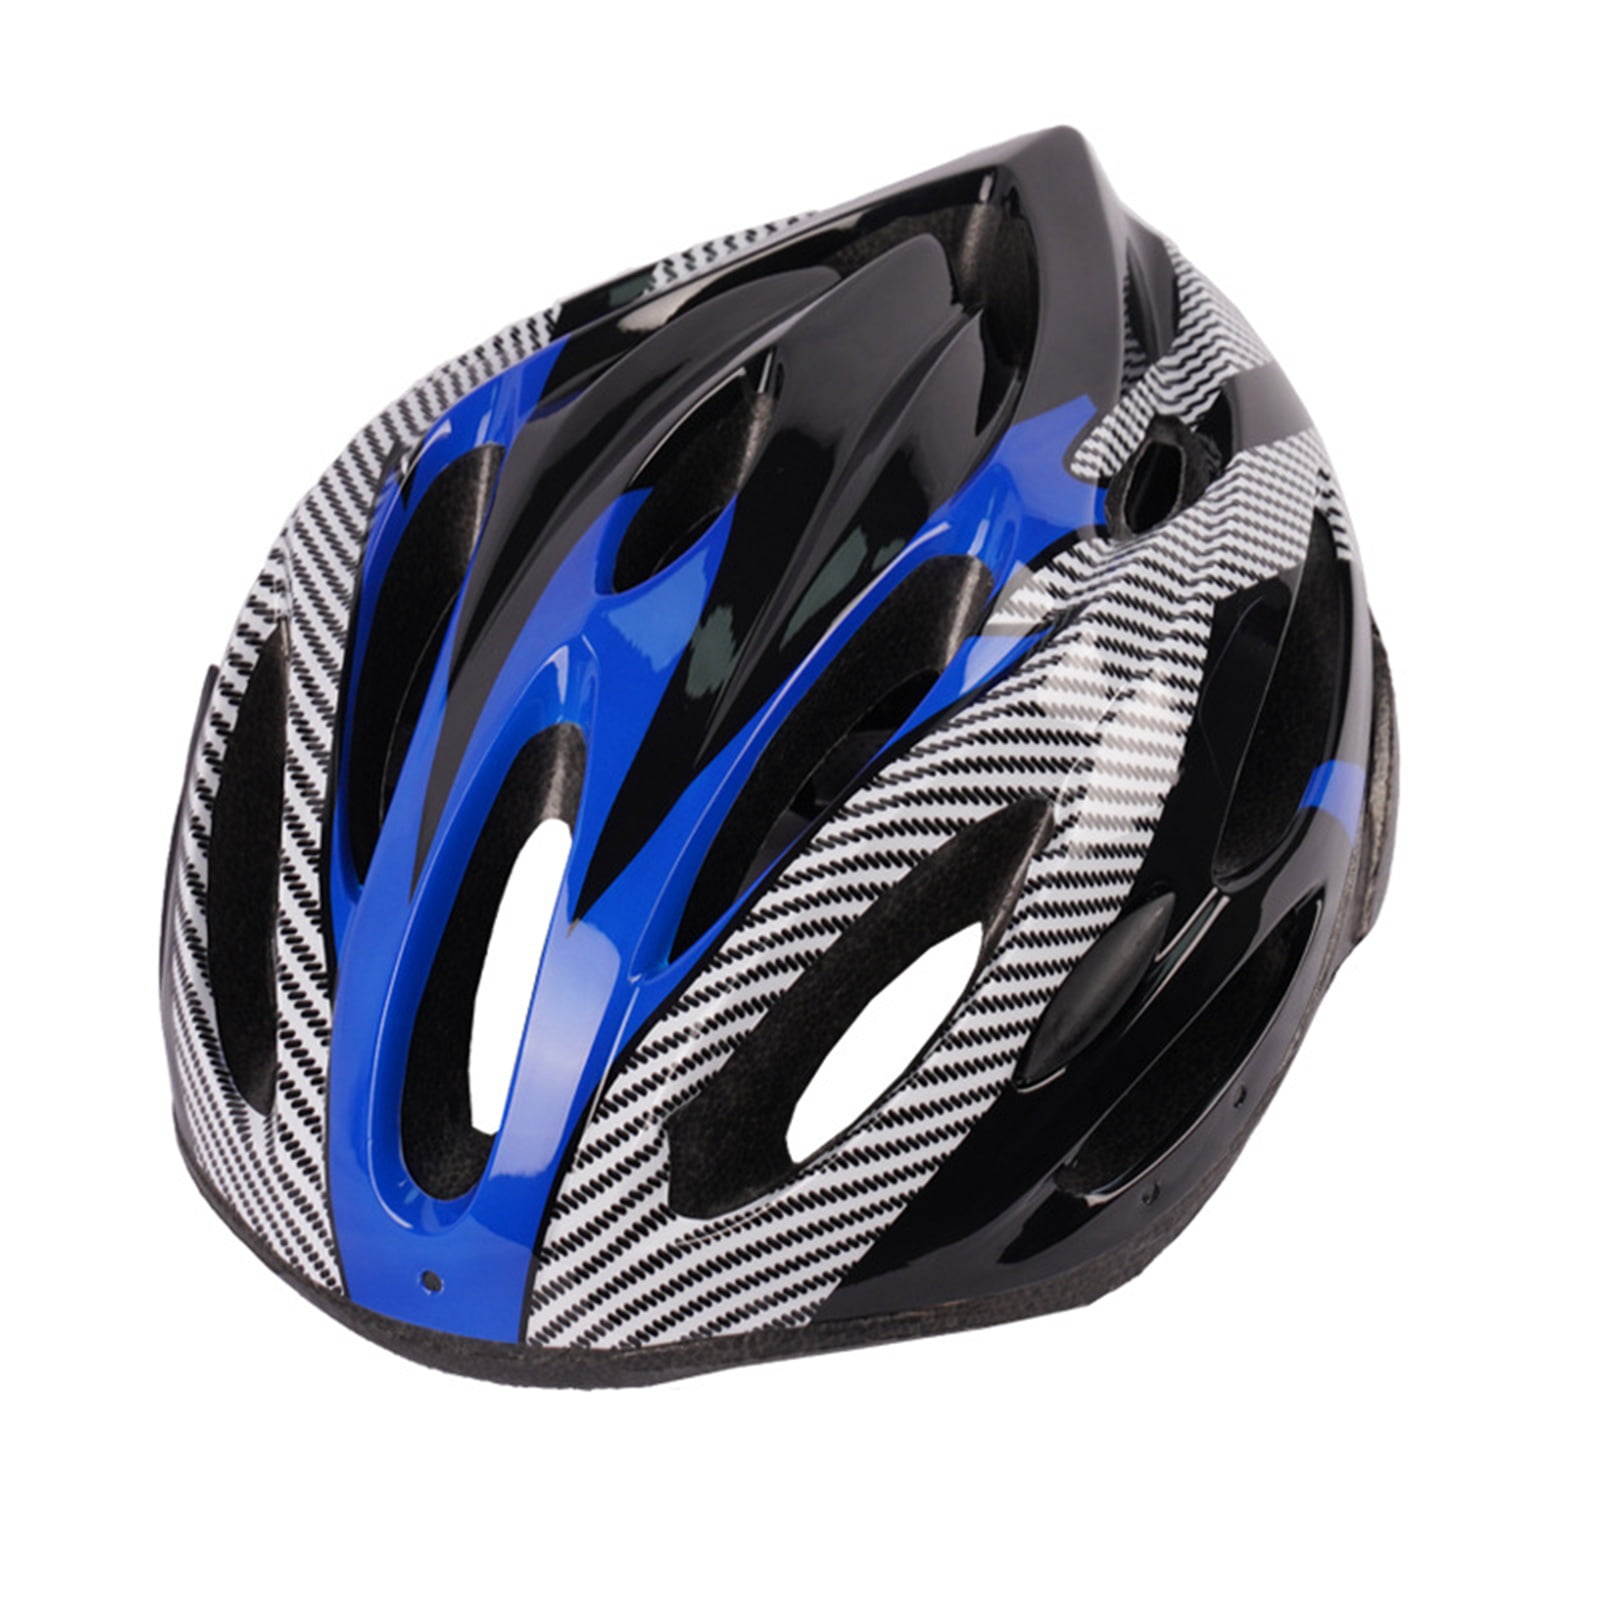 Cycling Helmet Women Men Bicycle Helmet Bike Mountain Road Cycling Safety Sports 